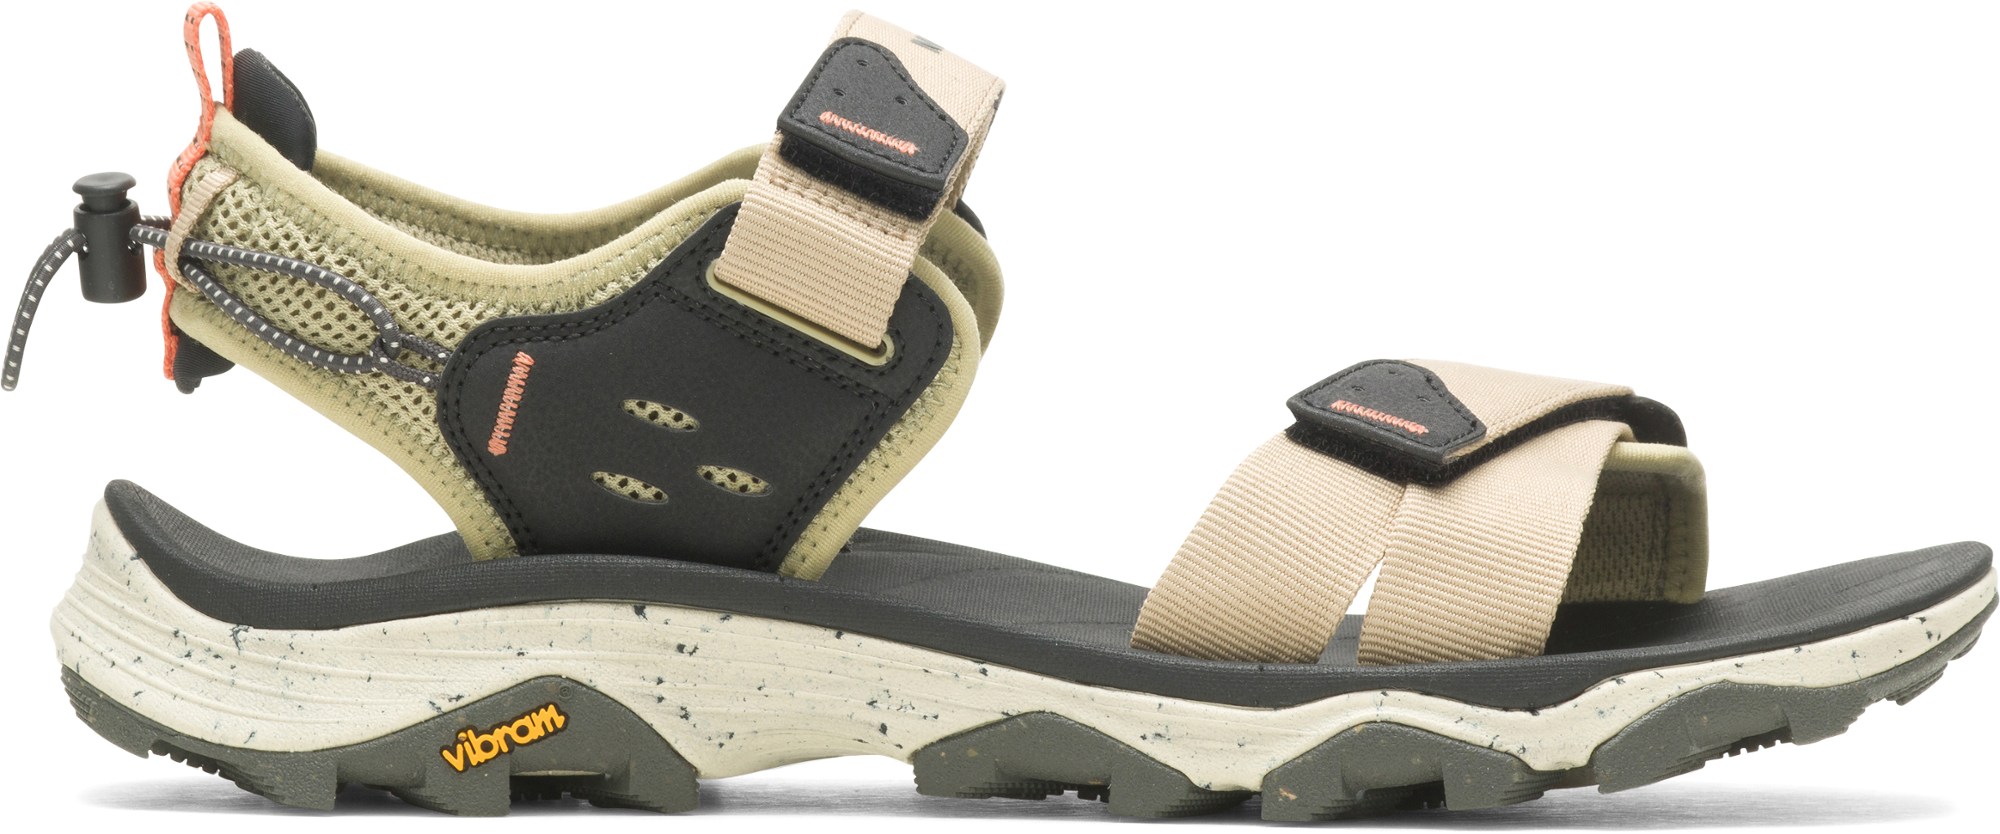 Merrell Speed Fusion Strap hiking sandal